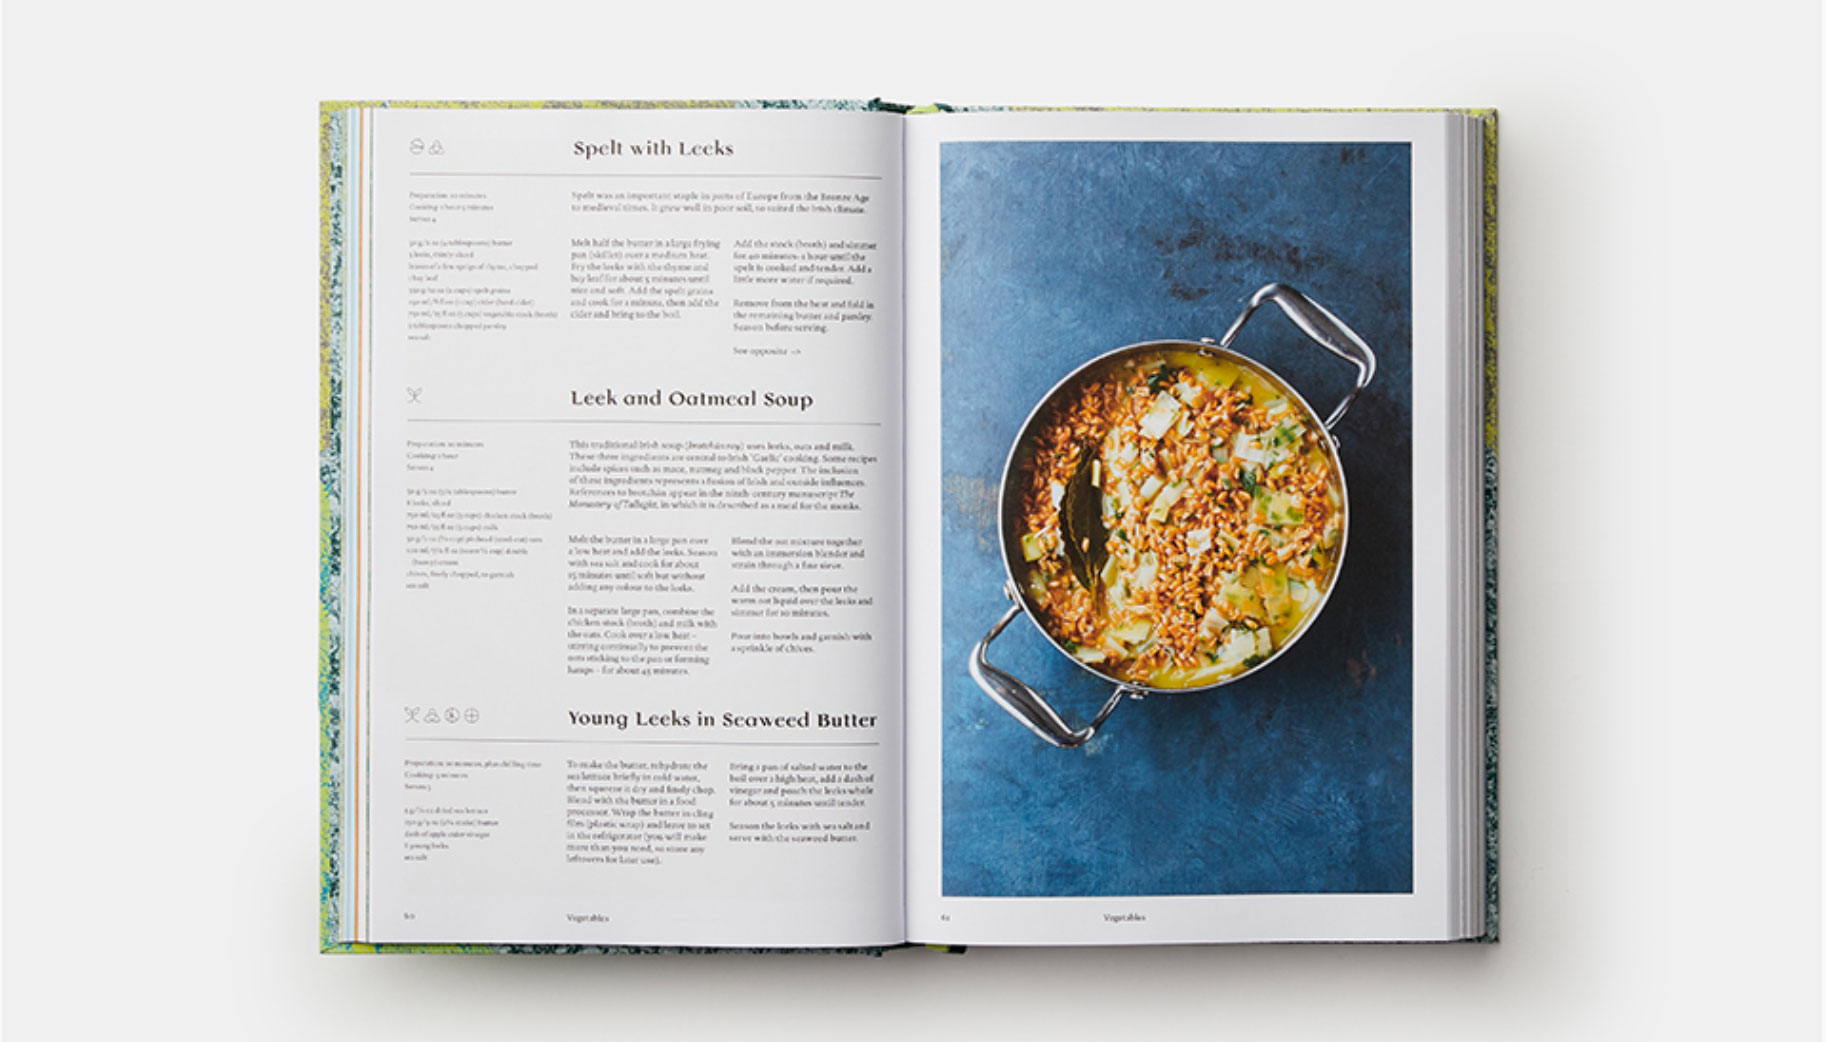 irish-cook-book-images-06.jpg